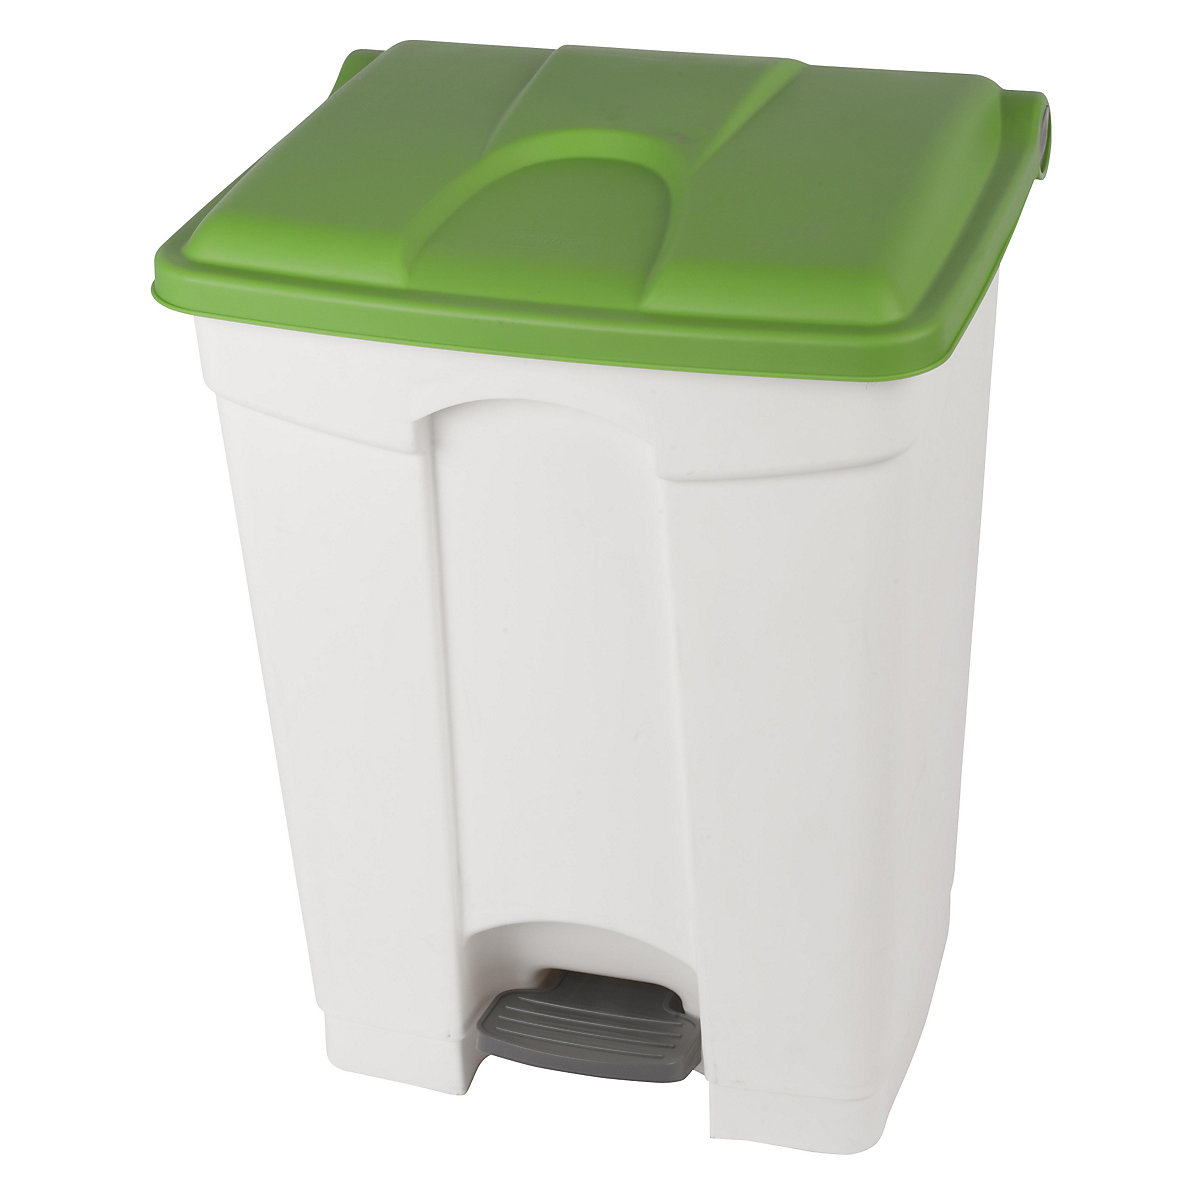 Coletor de lixo com pedal, volume 70 l, LxAxP 505 x 675 x 415 mm, branco, tampa verde-15